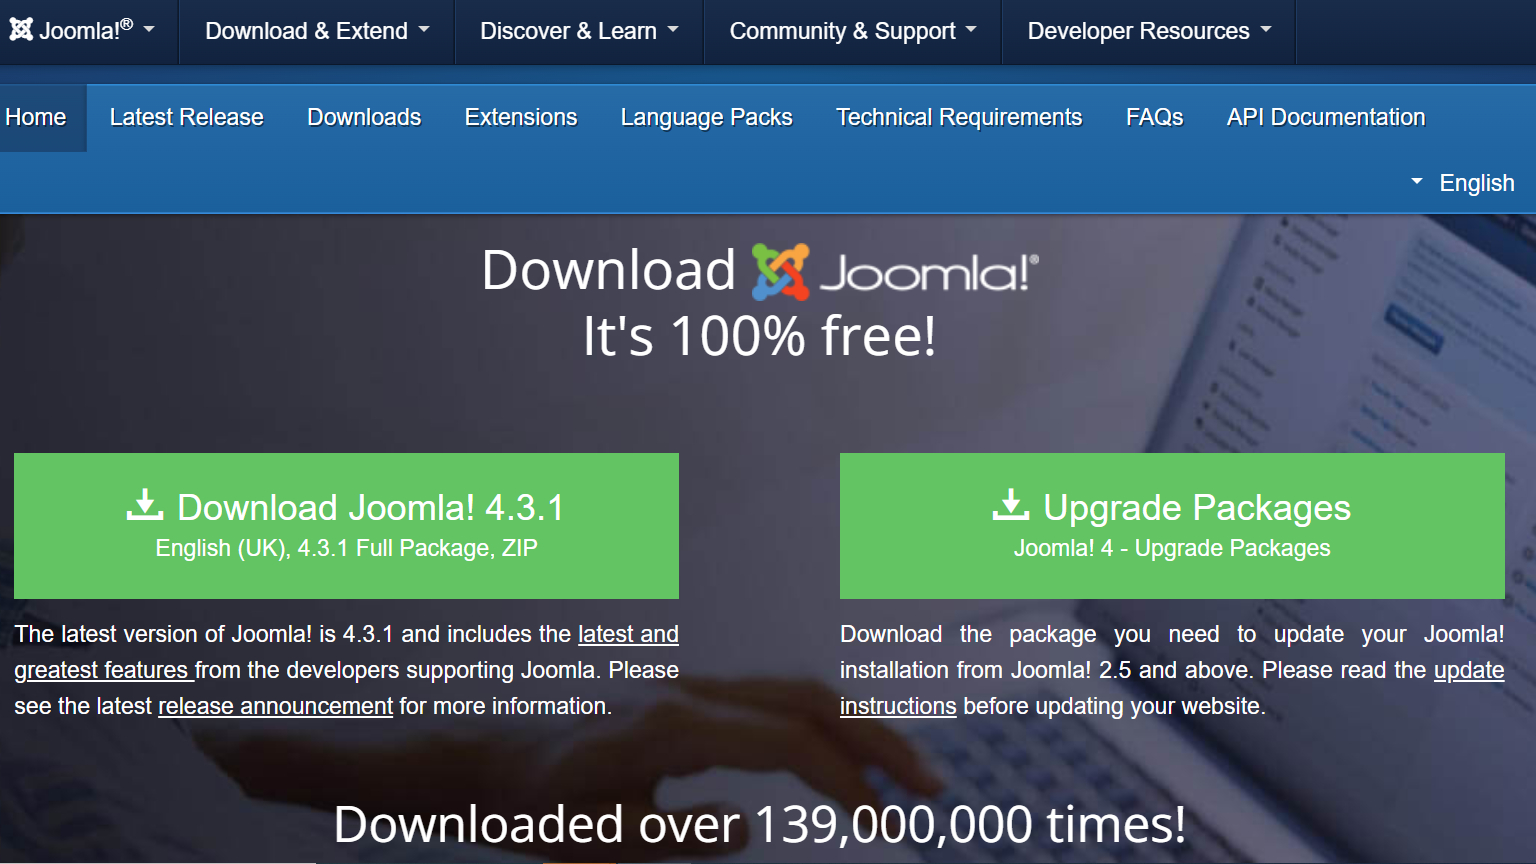 Joomla download page